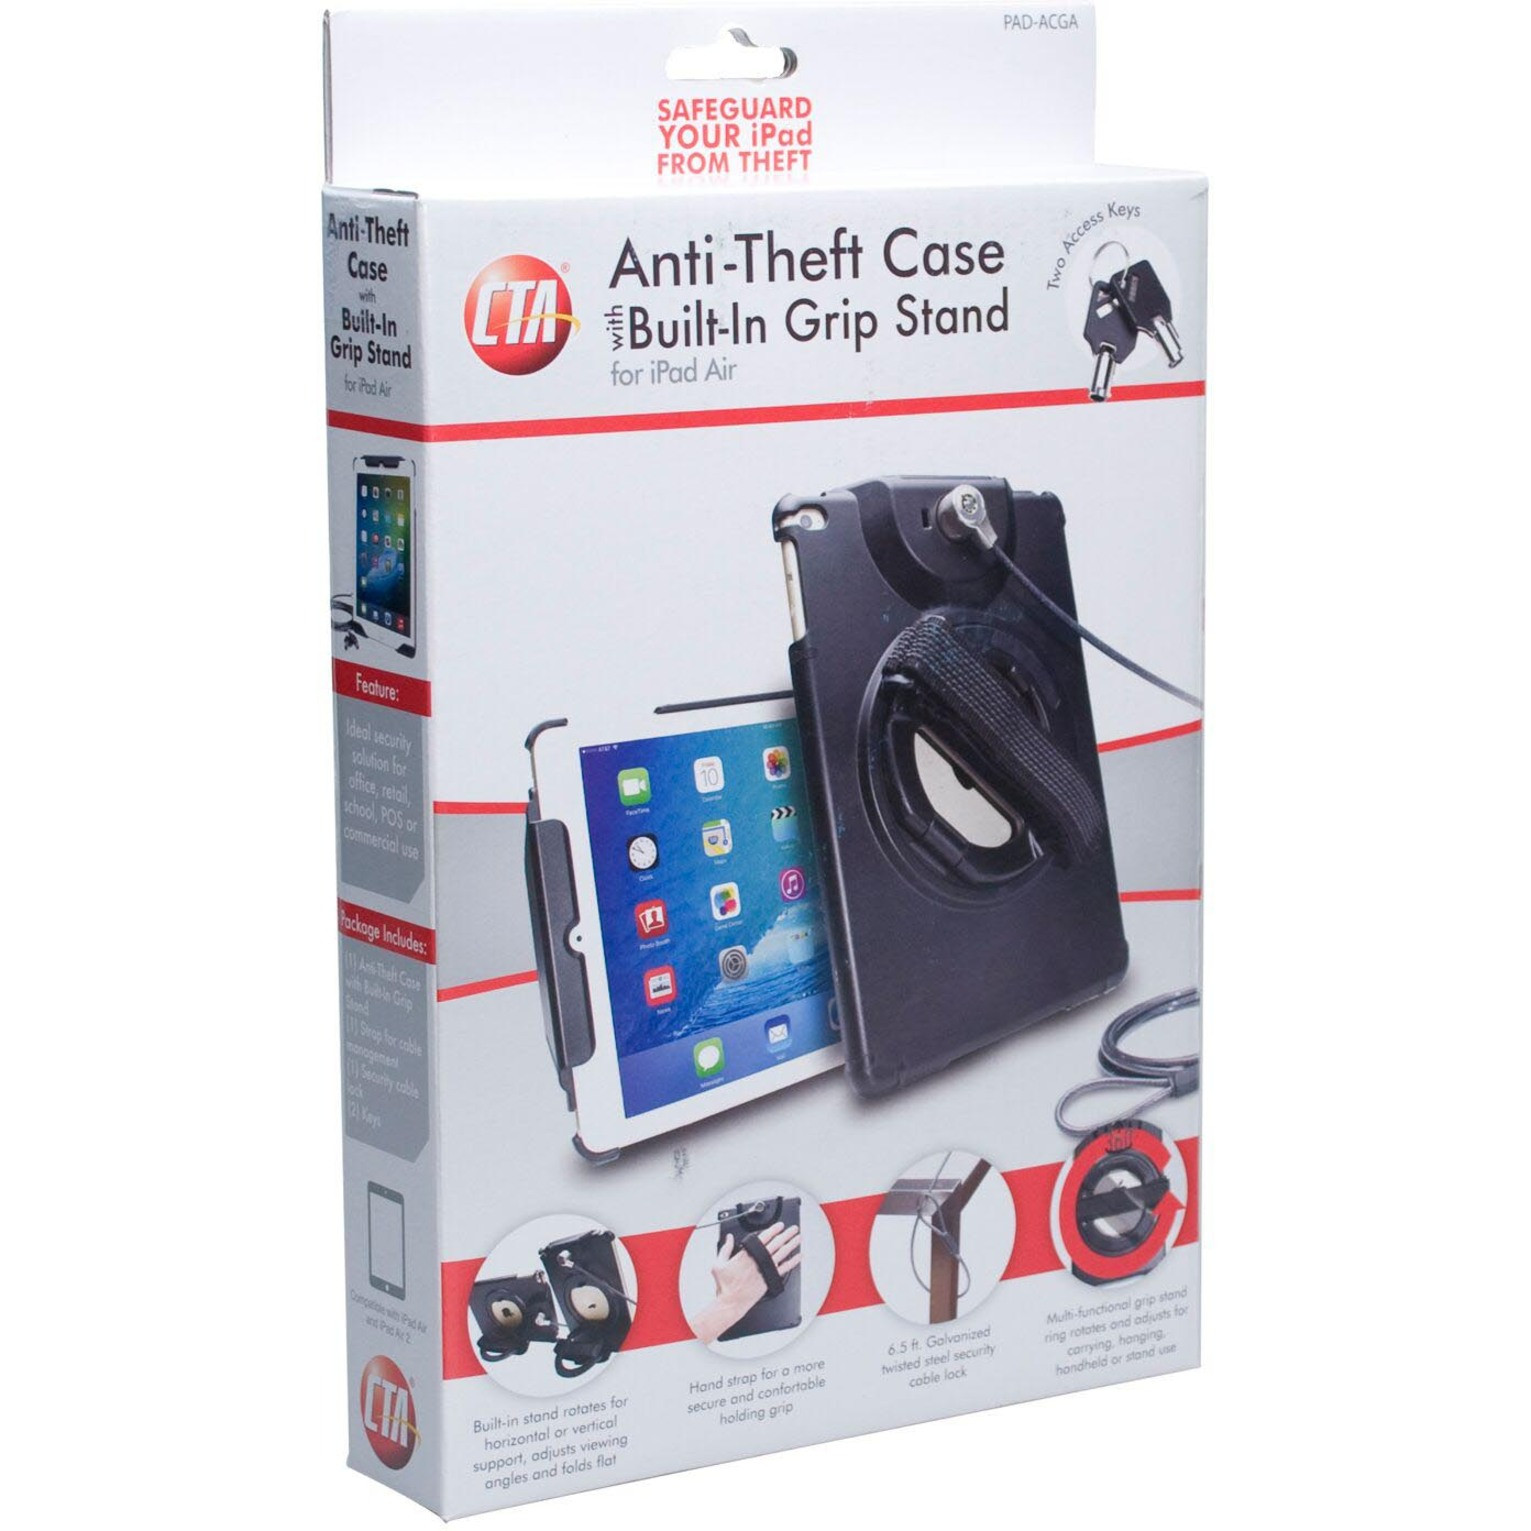 Cta Digital Accessories Anti-Theft Case Built-In Grip Stand for iPad Air iPad Pro 9.7Black PAD-ACGA - Corporate